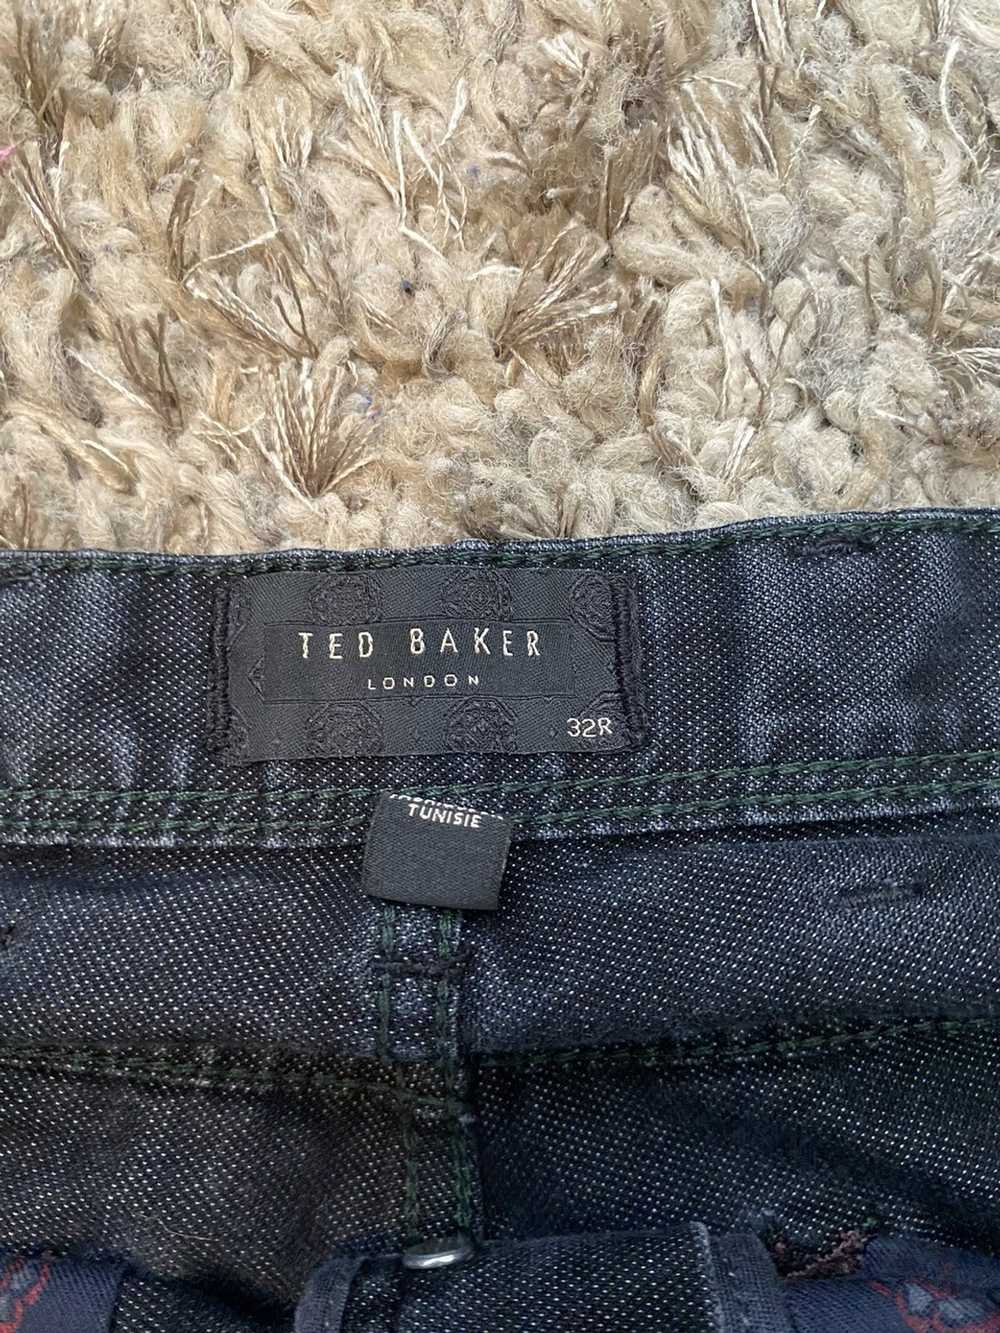 Ted Baker Ted Baker Jeans - image 3